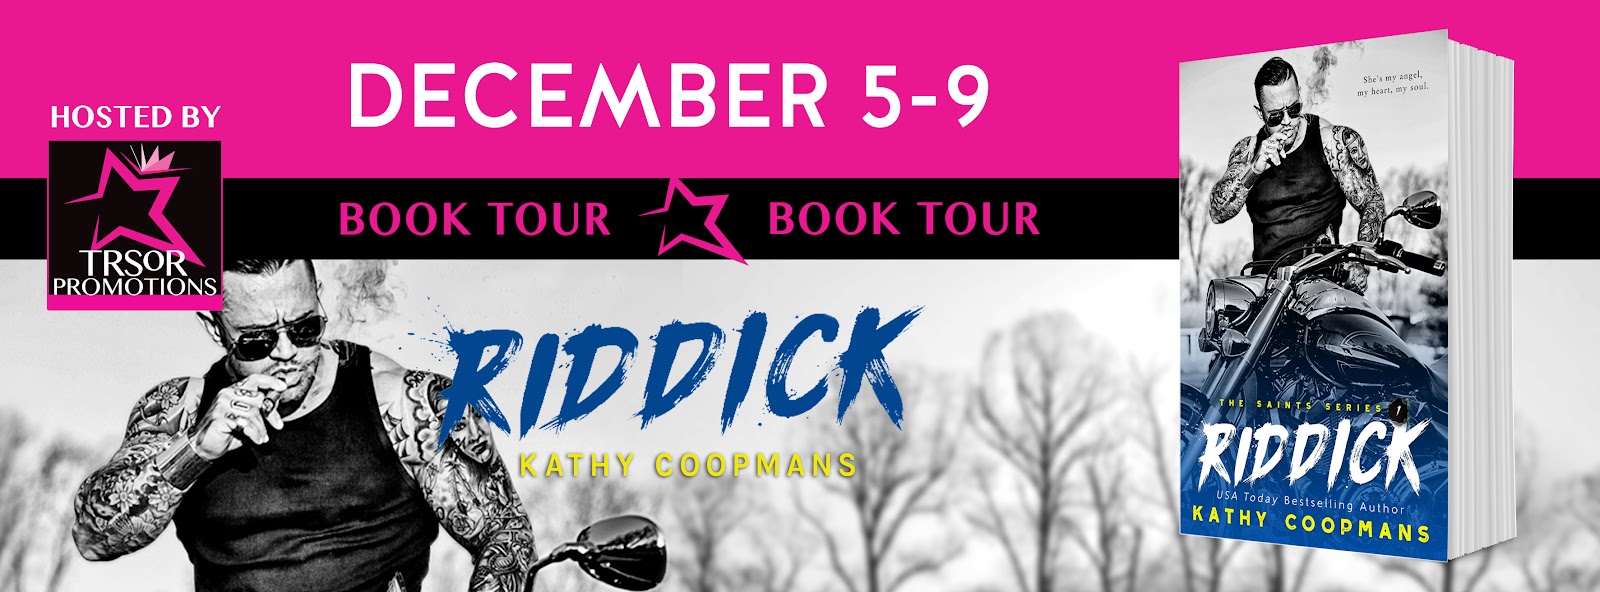 RIDDICK_BOOK_TOUR.jpg